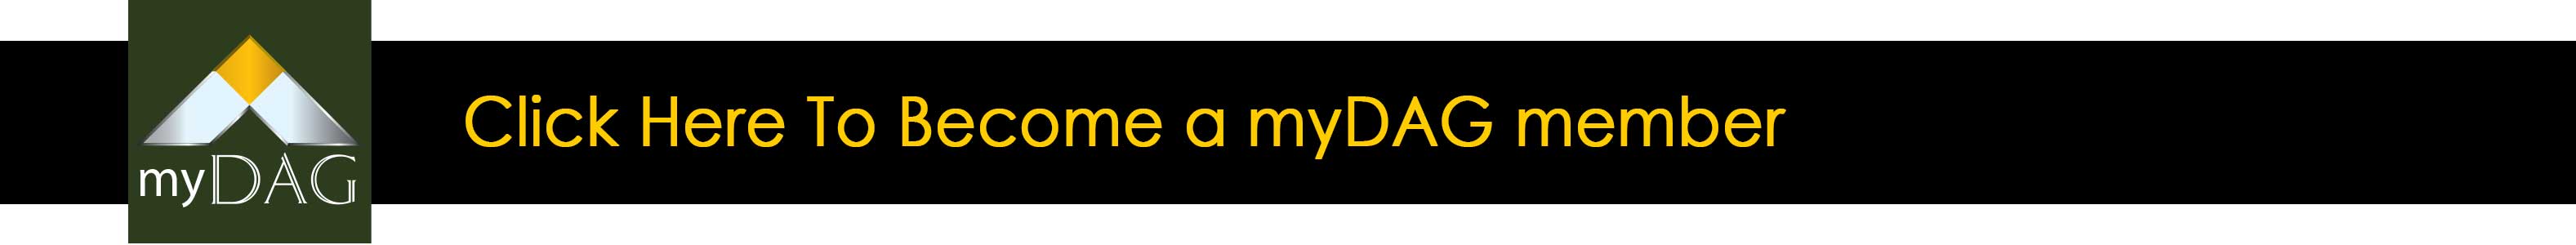 myDAG account sign up